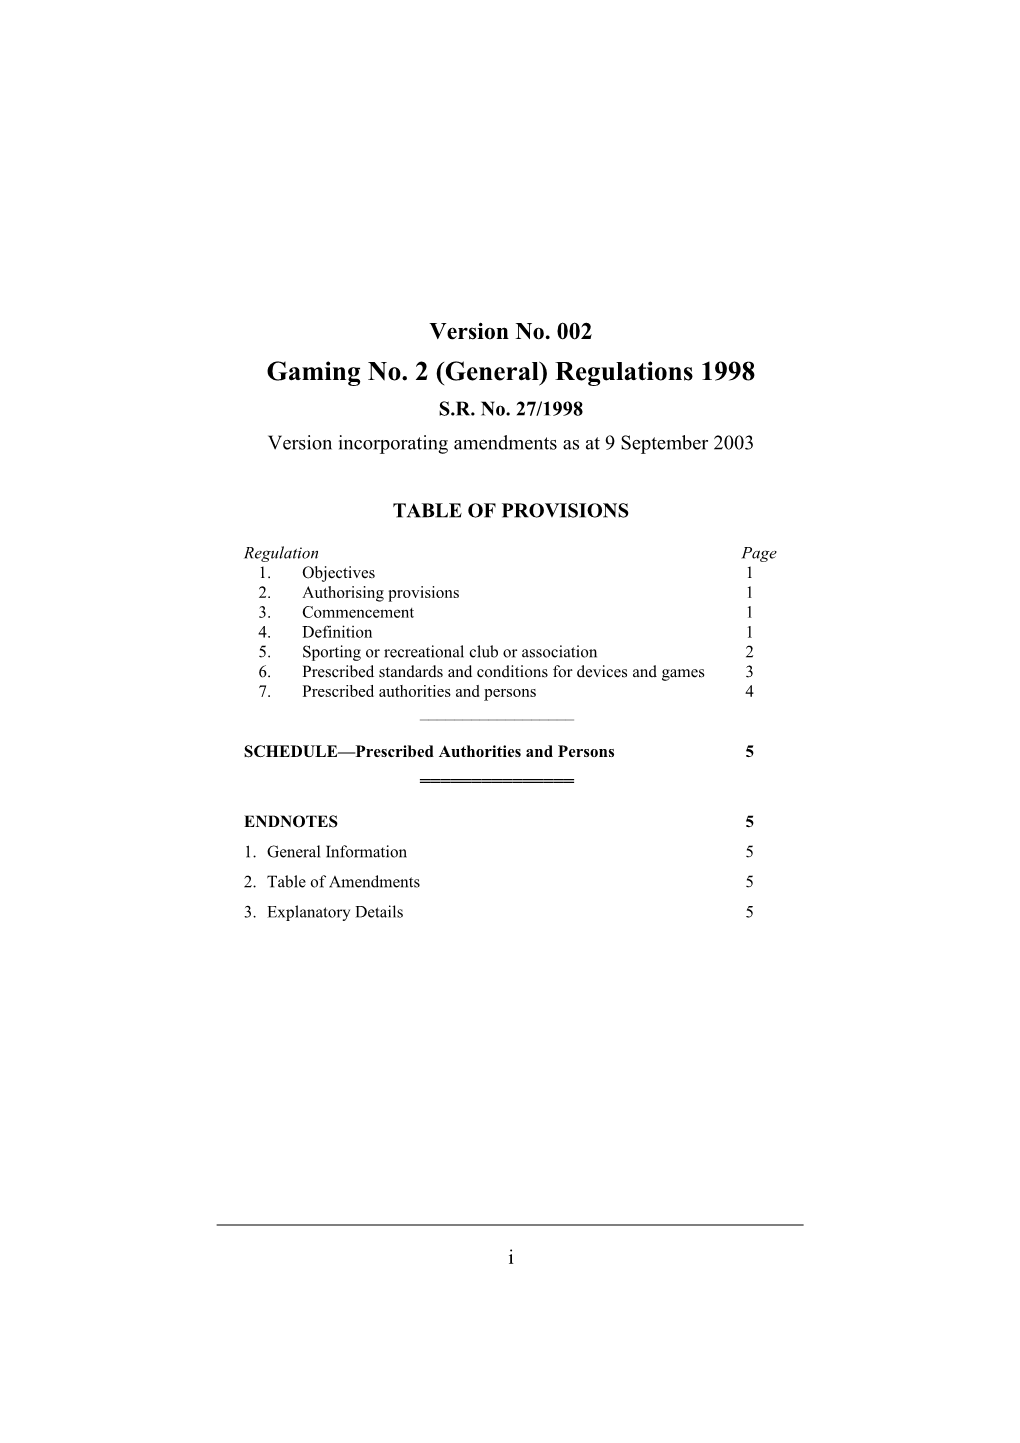 Gaming No. 2 (General) Regulations 1998